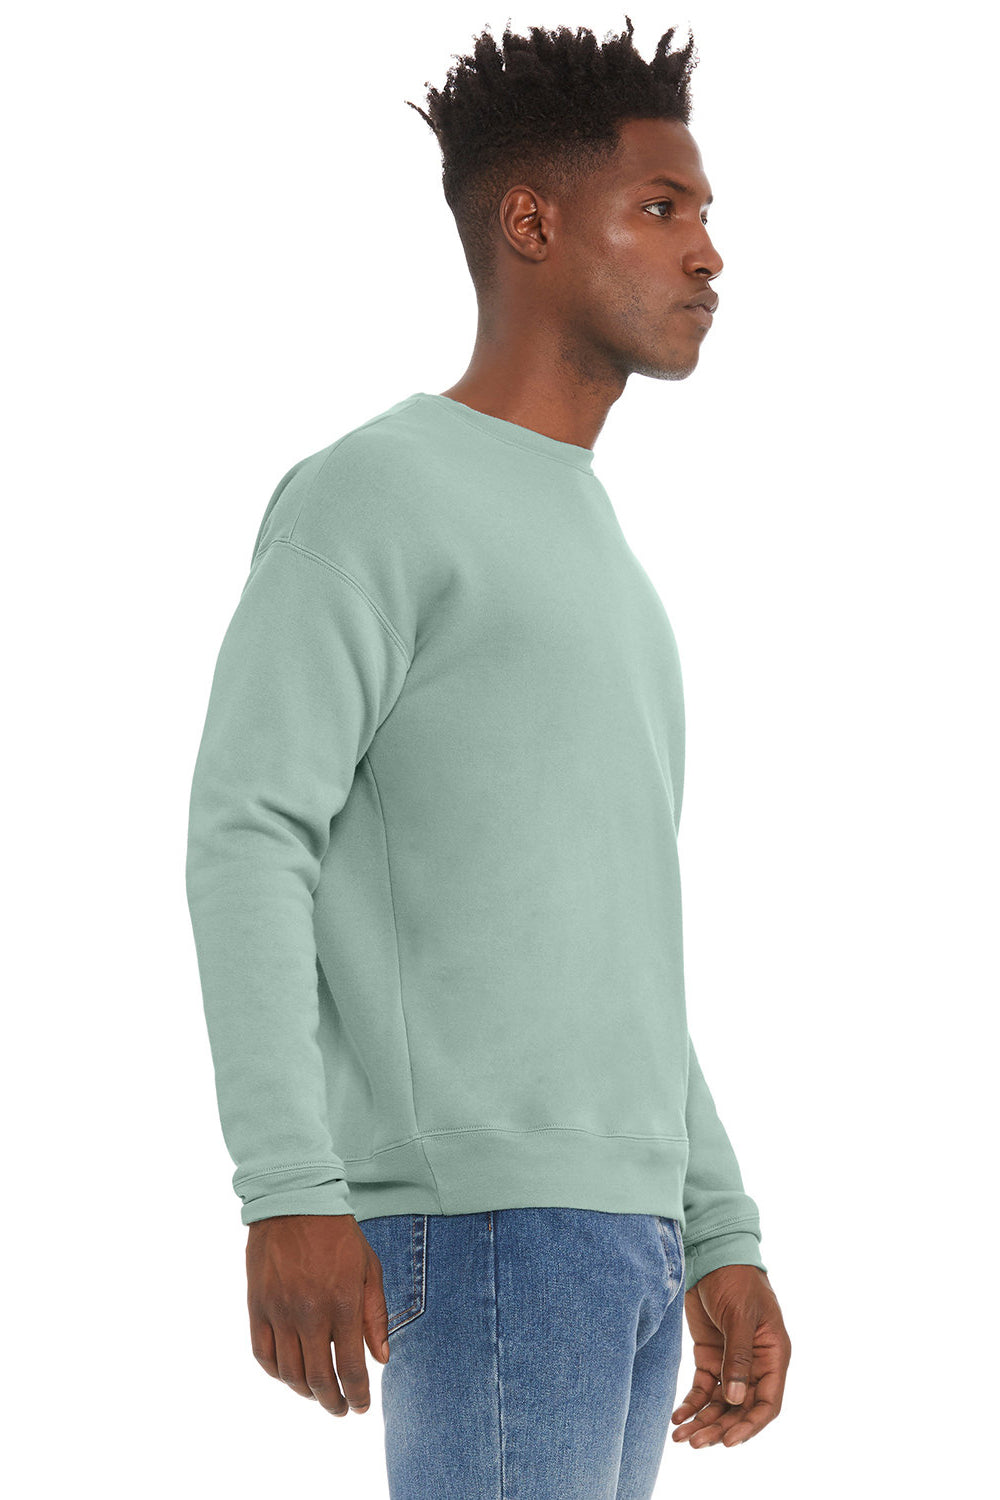 Bella + Canvas BC3945/3945 Mens Fleece Crewneck Sweatshirt Dusty Blue Model Side